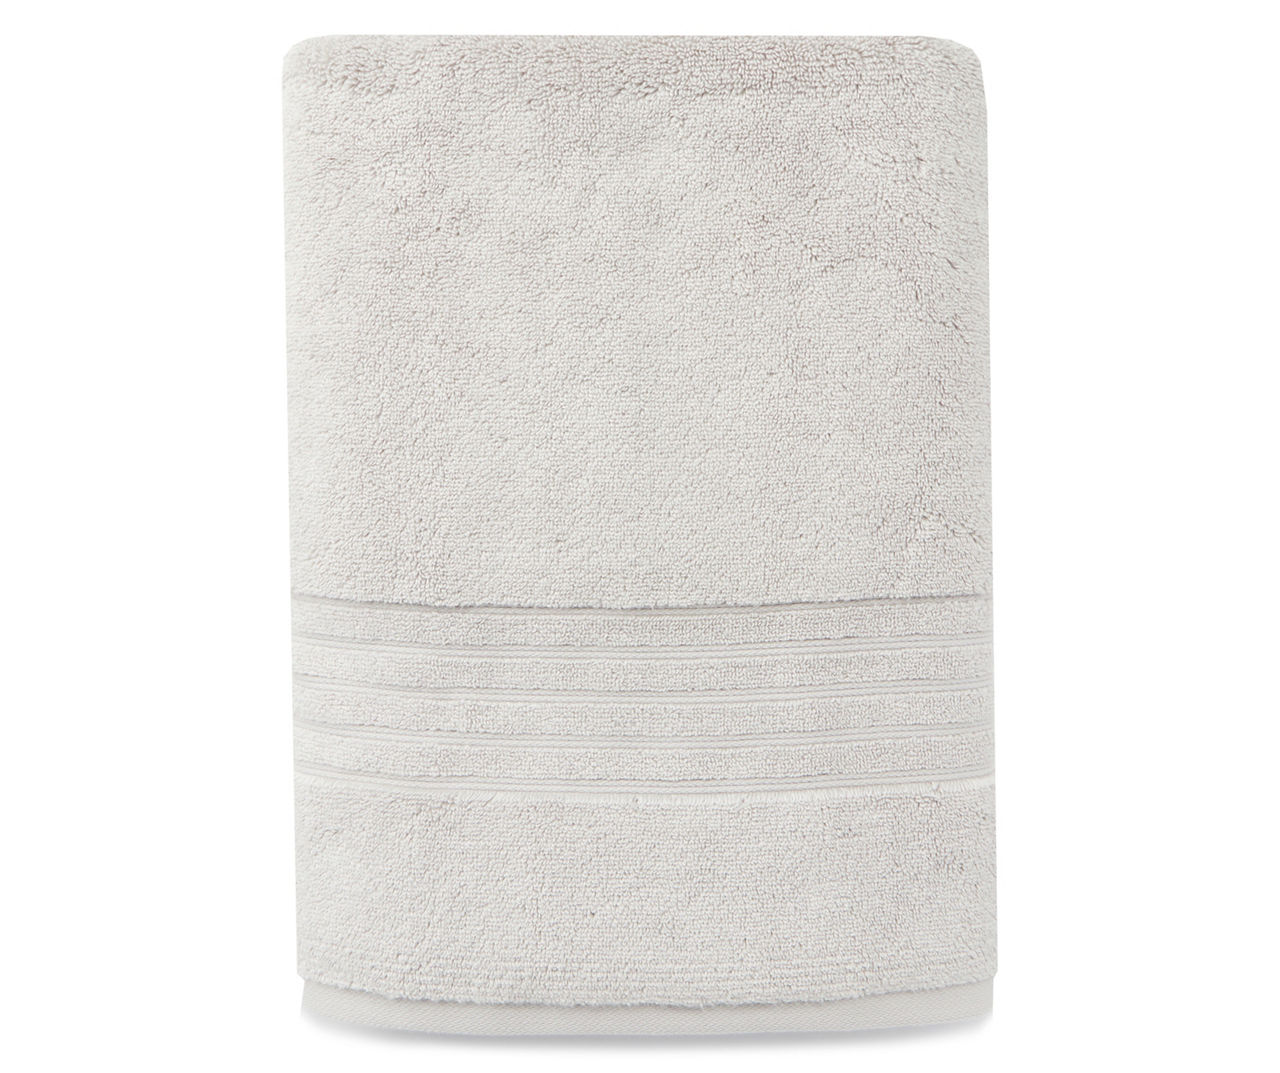 Broyhill Broyhill Egyptian Cotton Towel